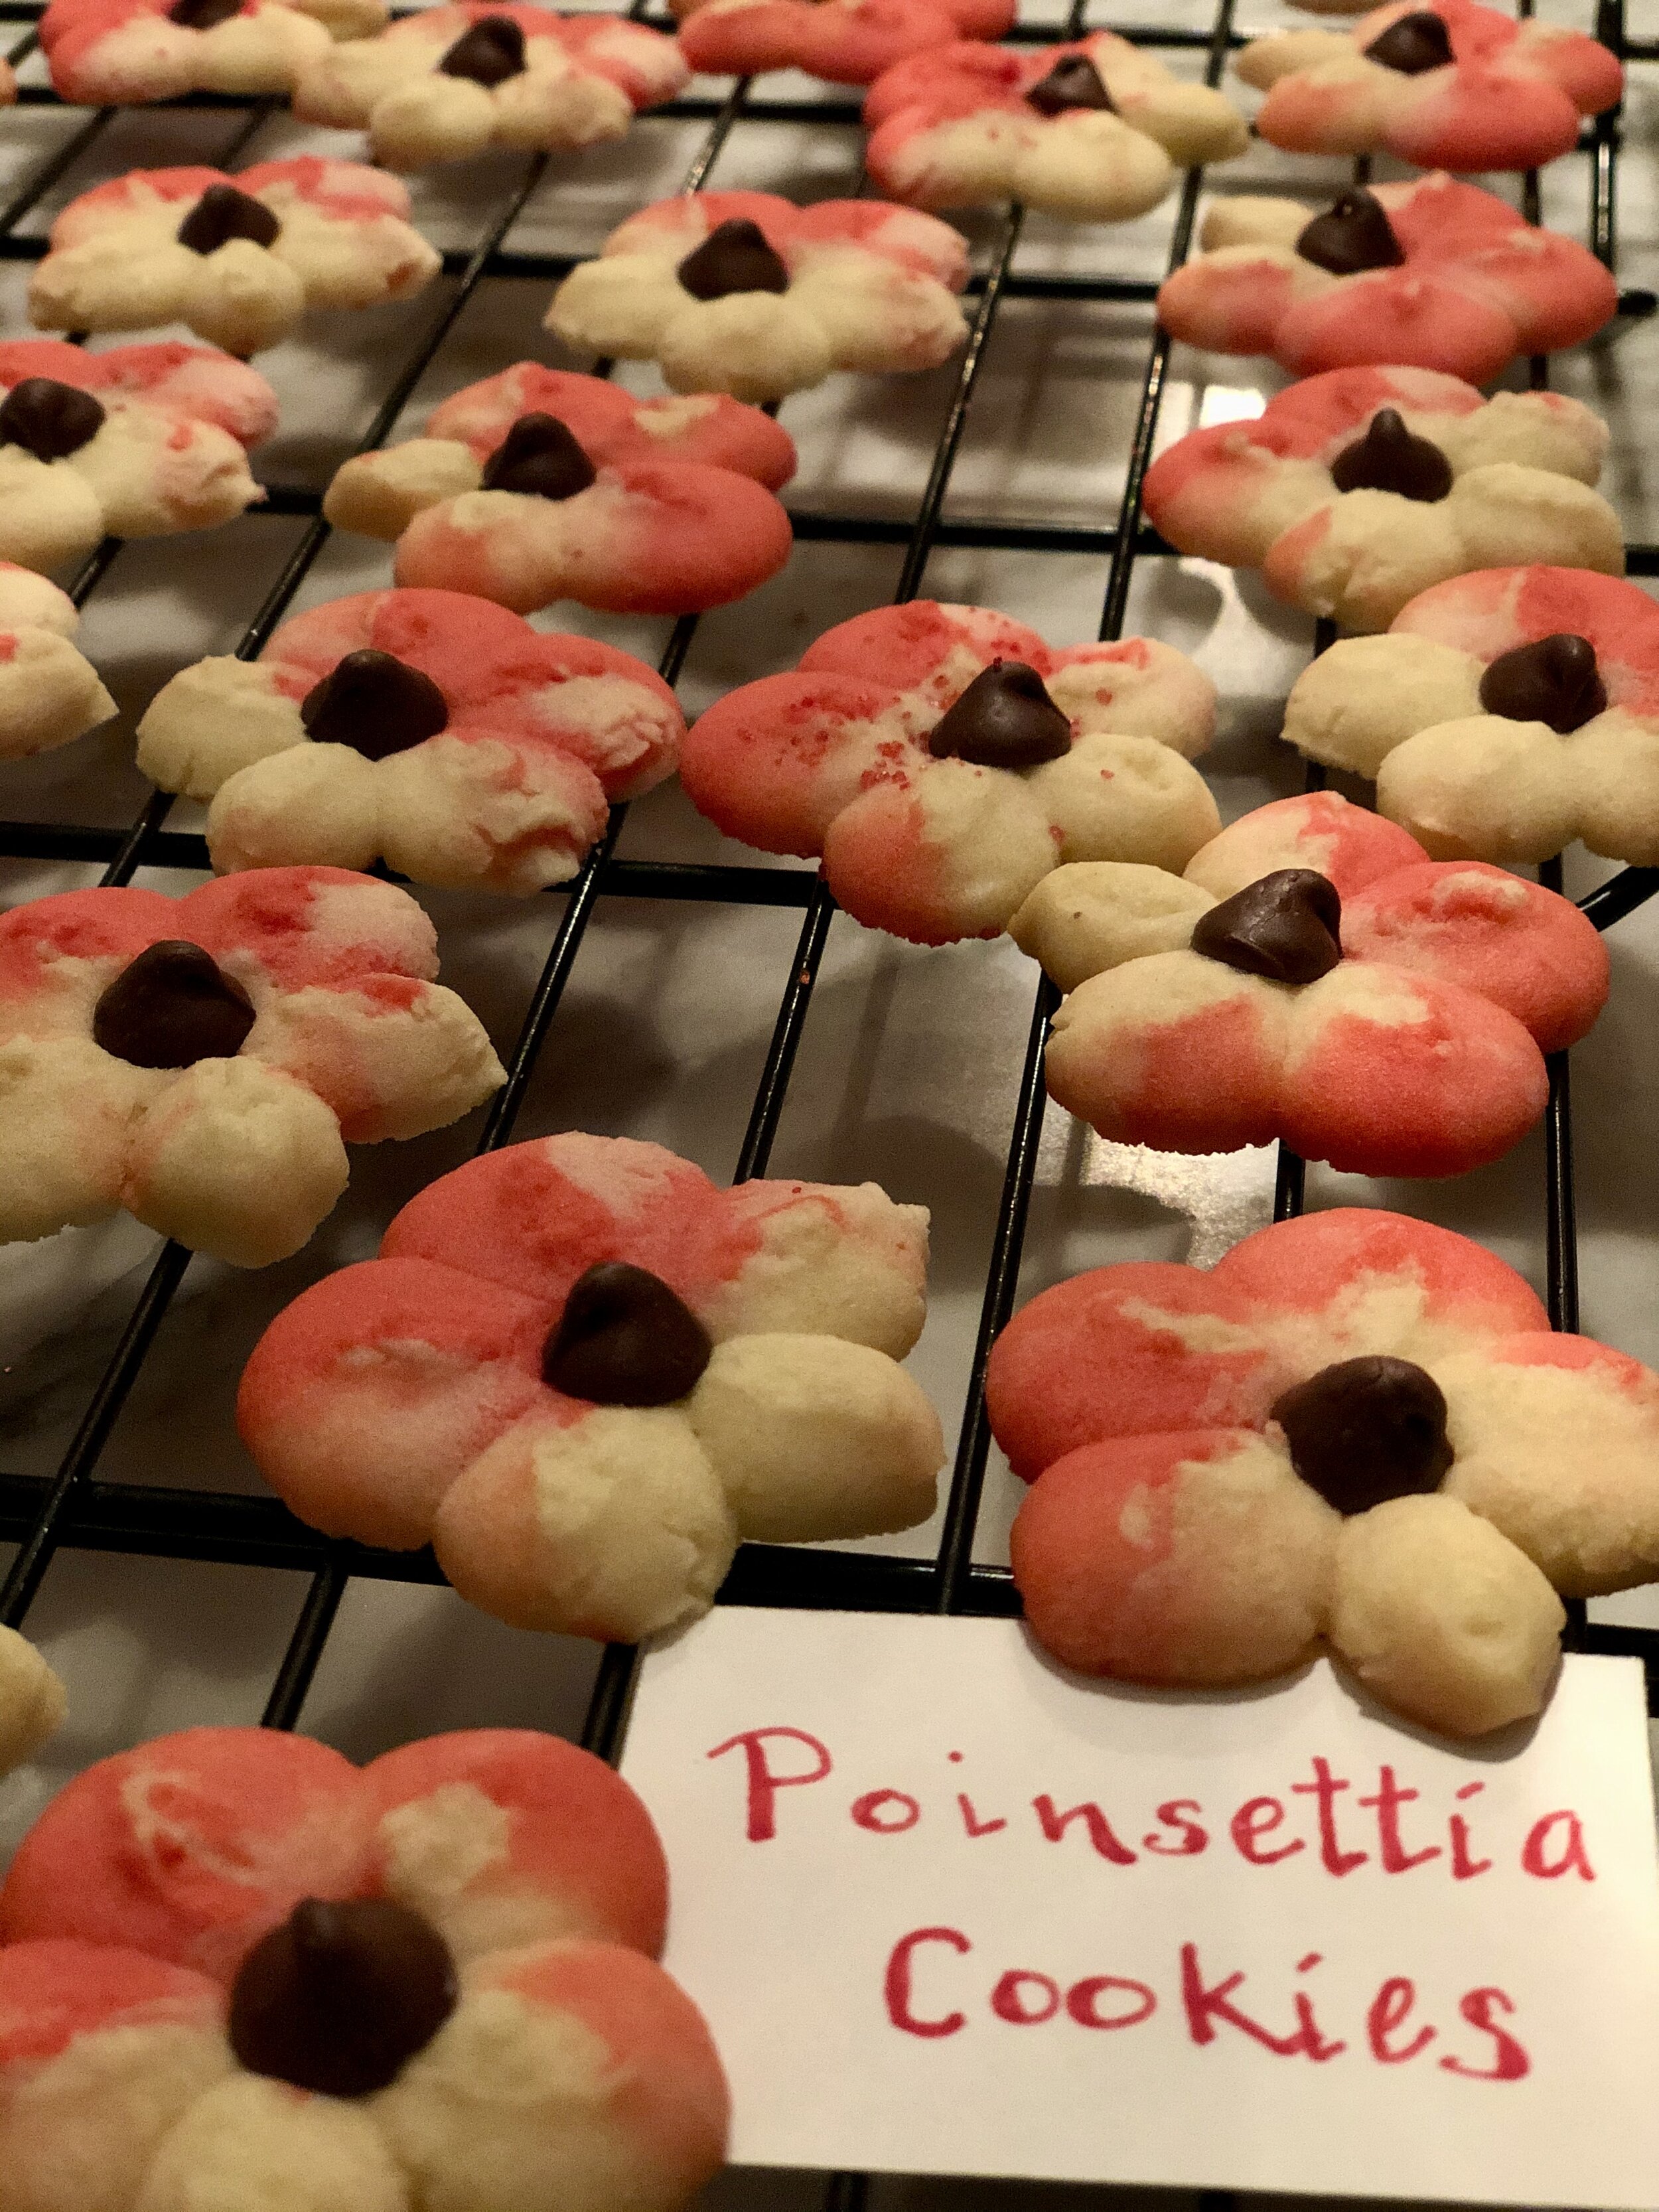 Poinsettia Cookies